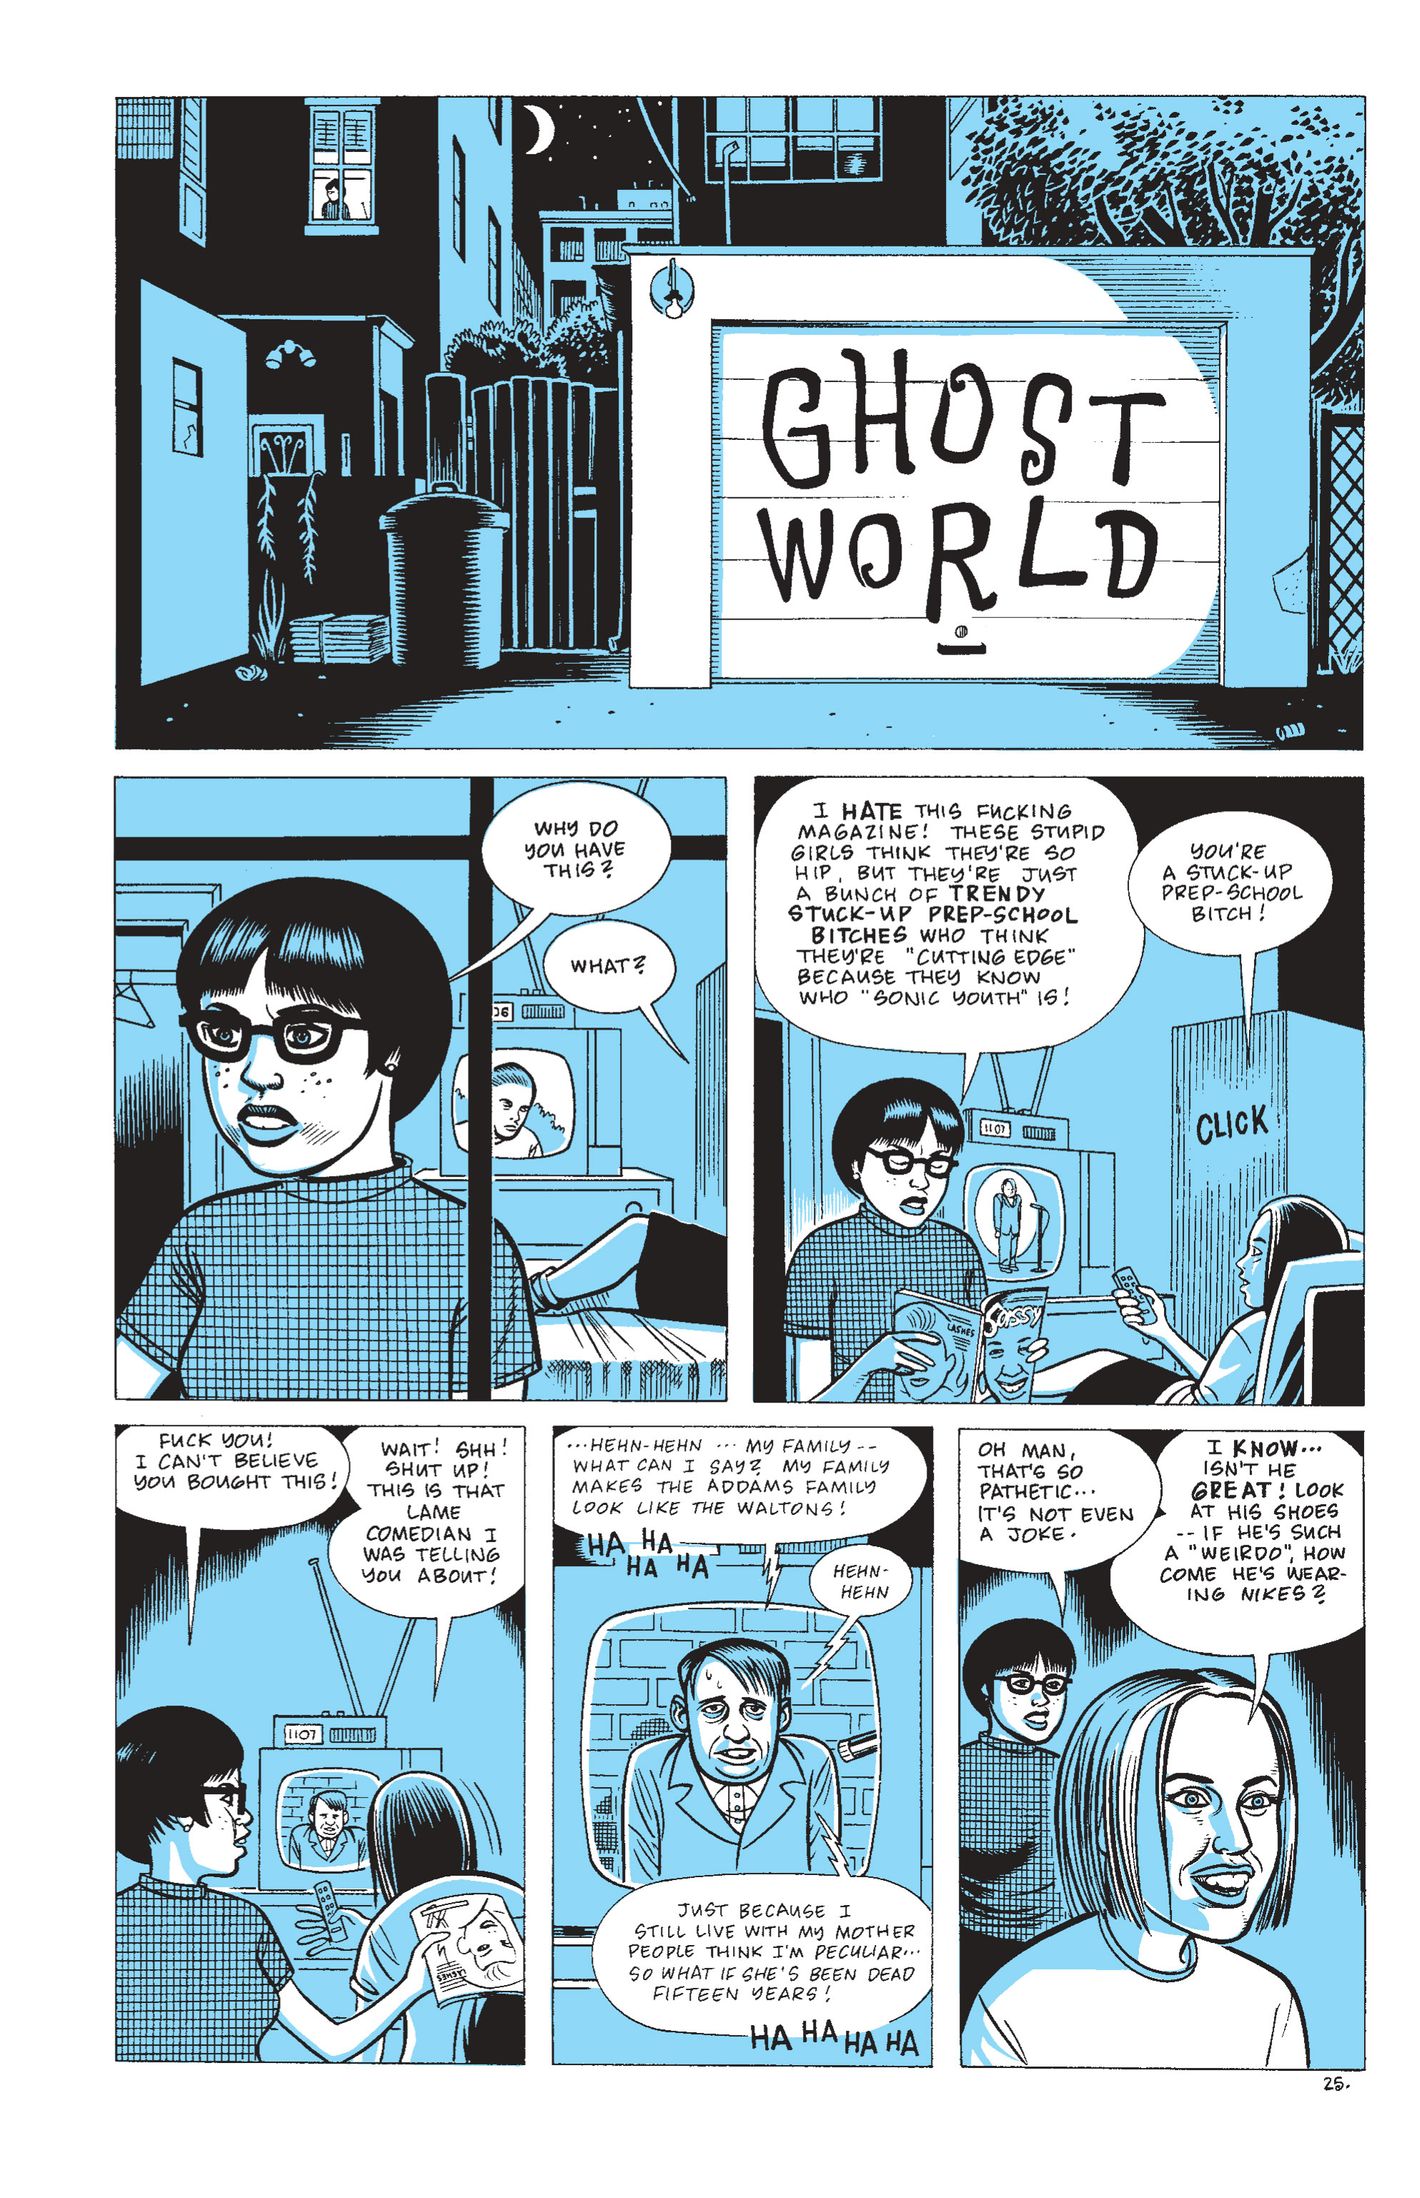 seymour ghost world comic